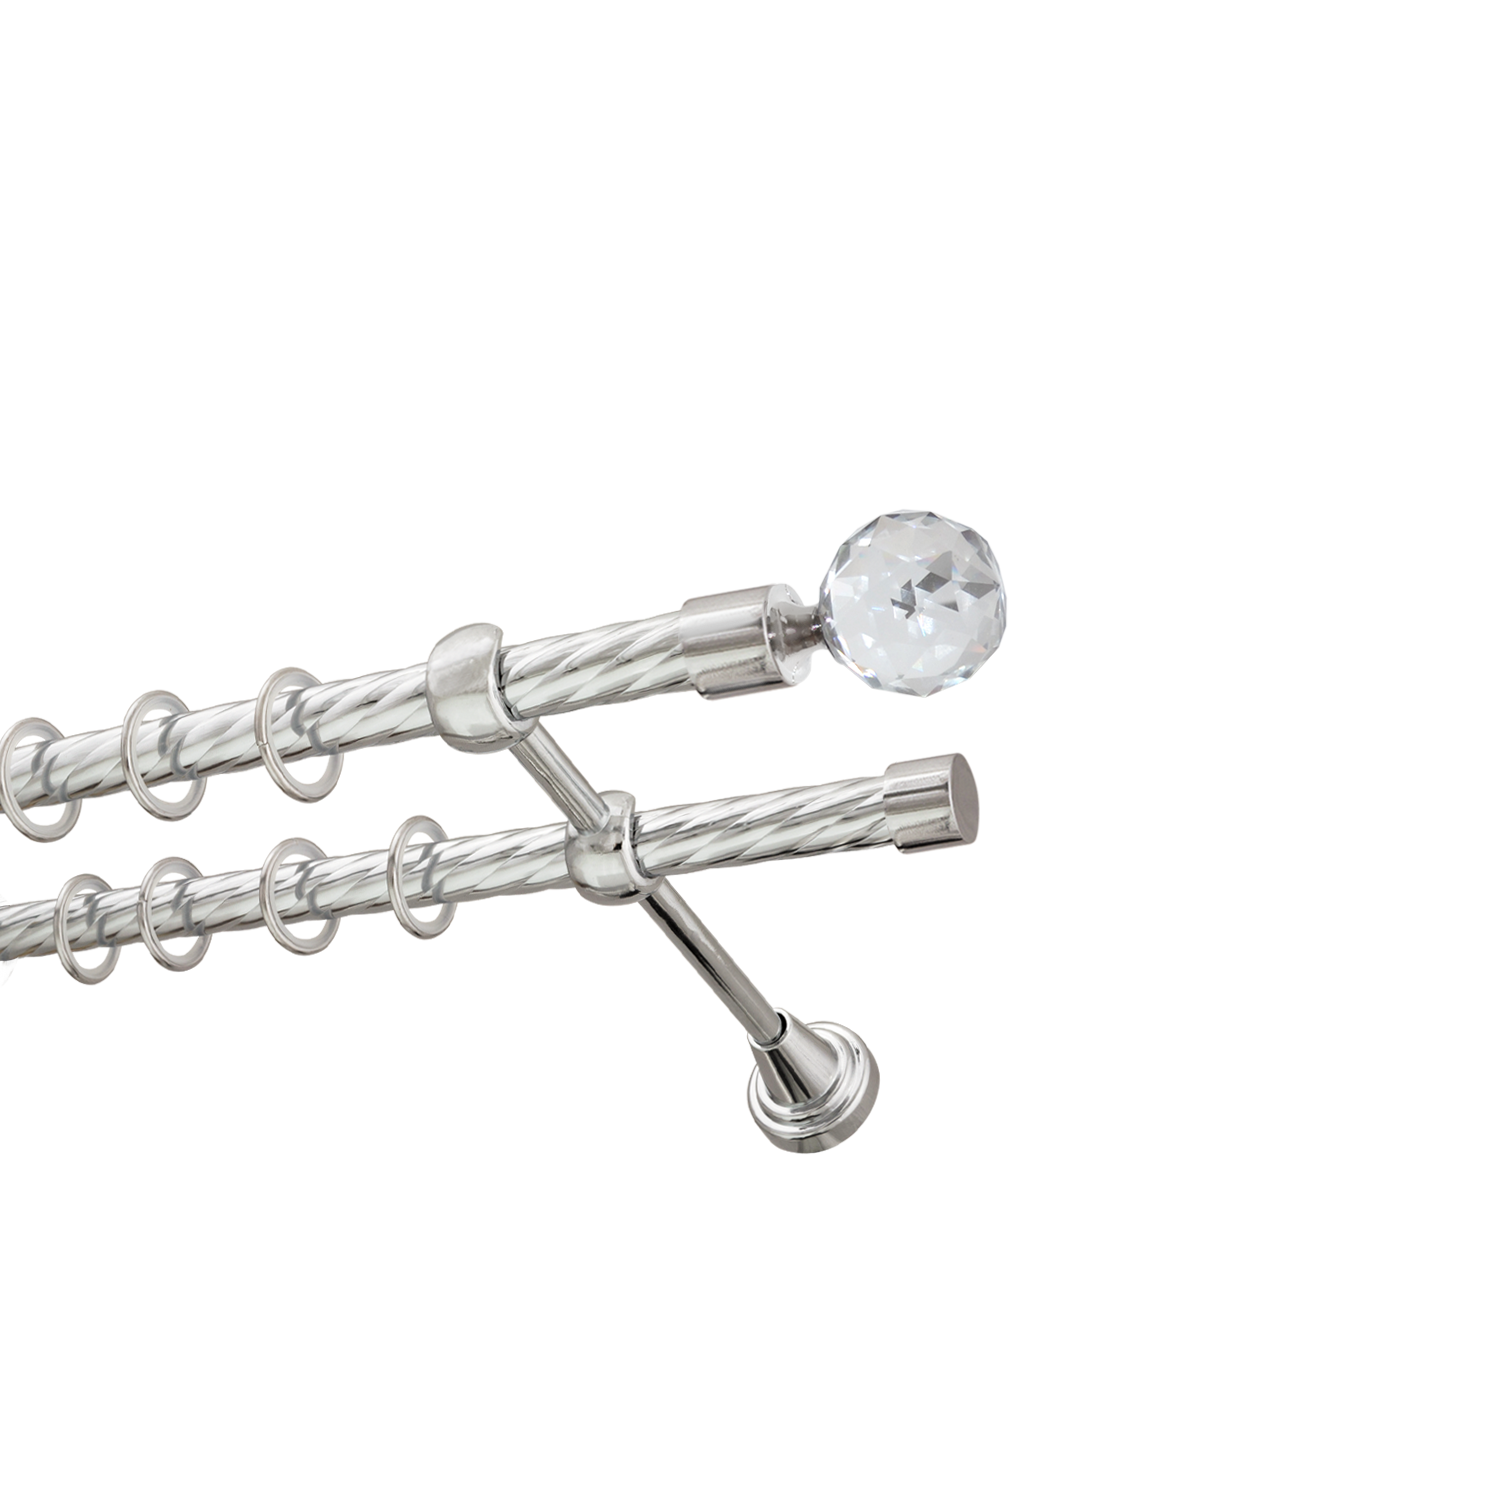 Металлический карниз для штор Карат, двухрядный 16/16 мм, серебро, витая штанга, длина 200 см - фото Wikidecor.ru